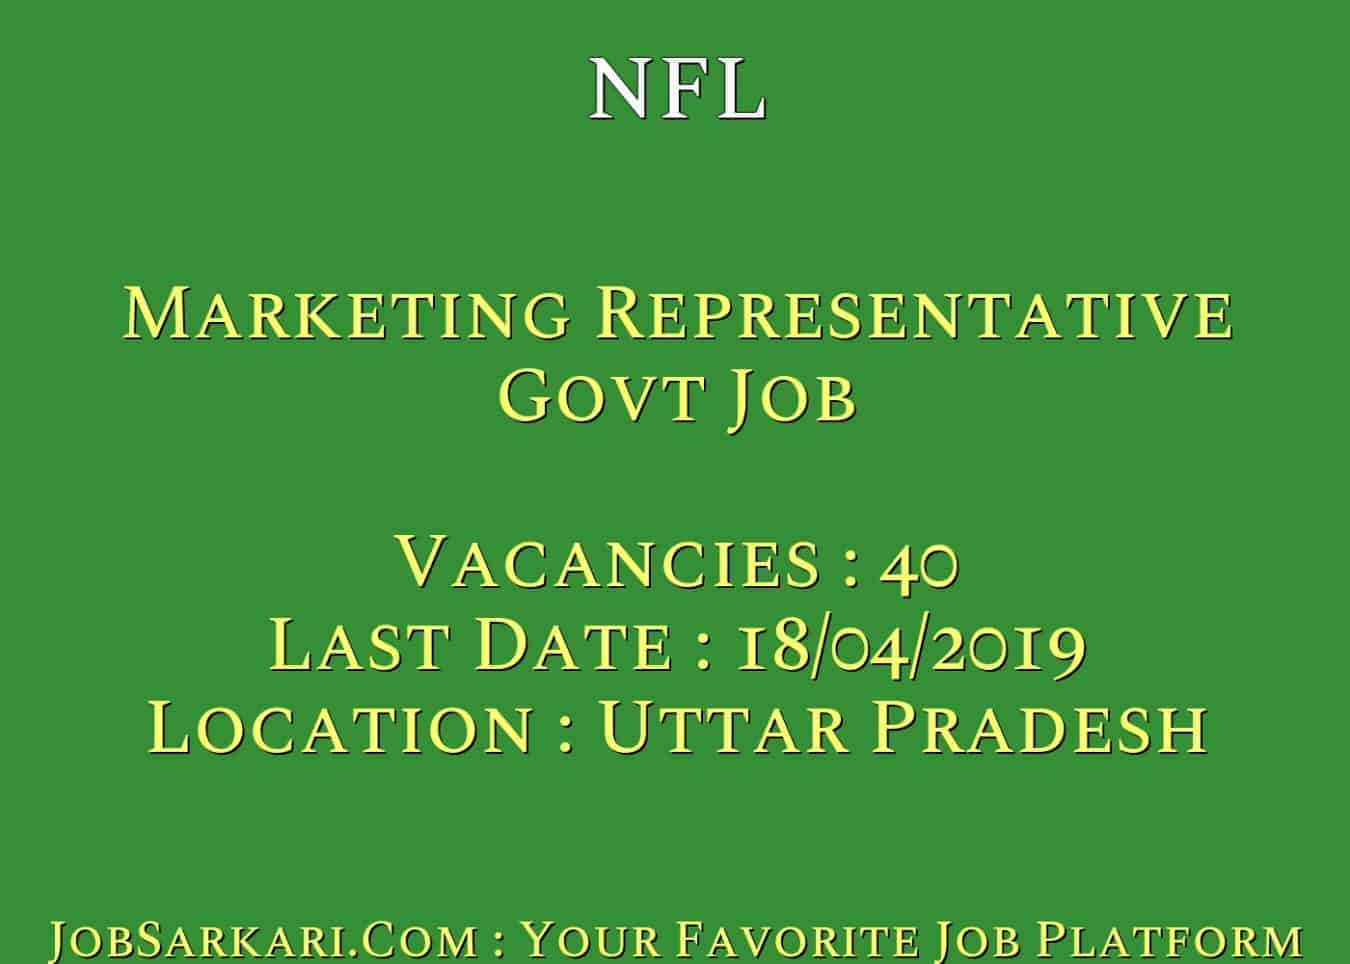 NFL Recruitment 2019 For Marketing Representative Govt Job